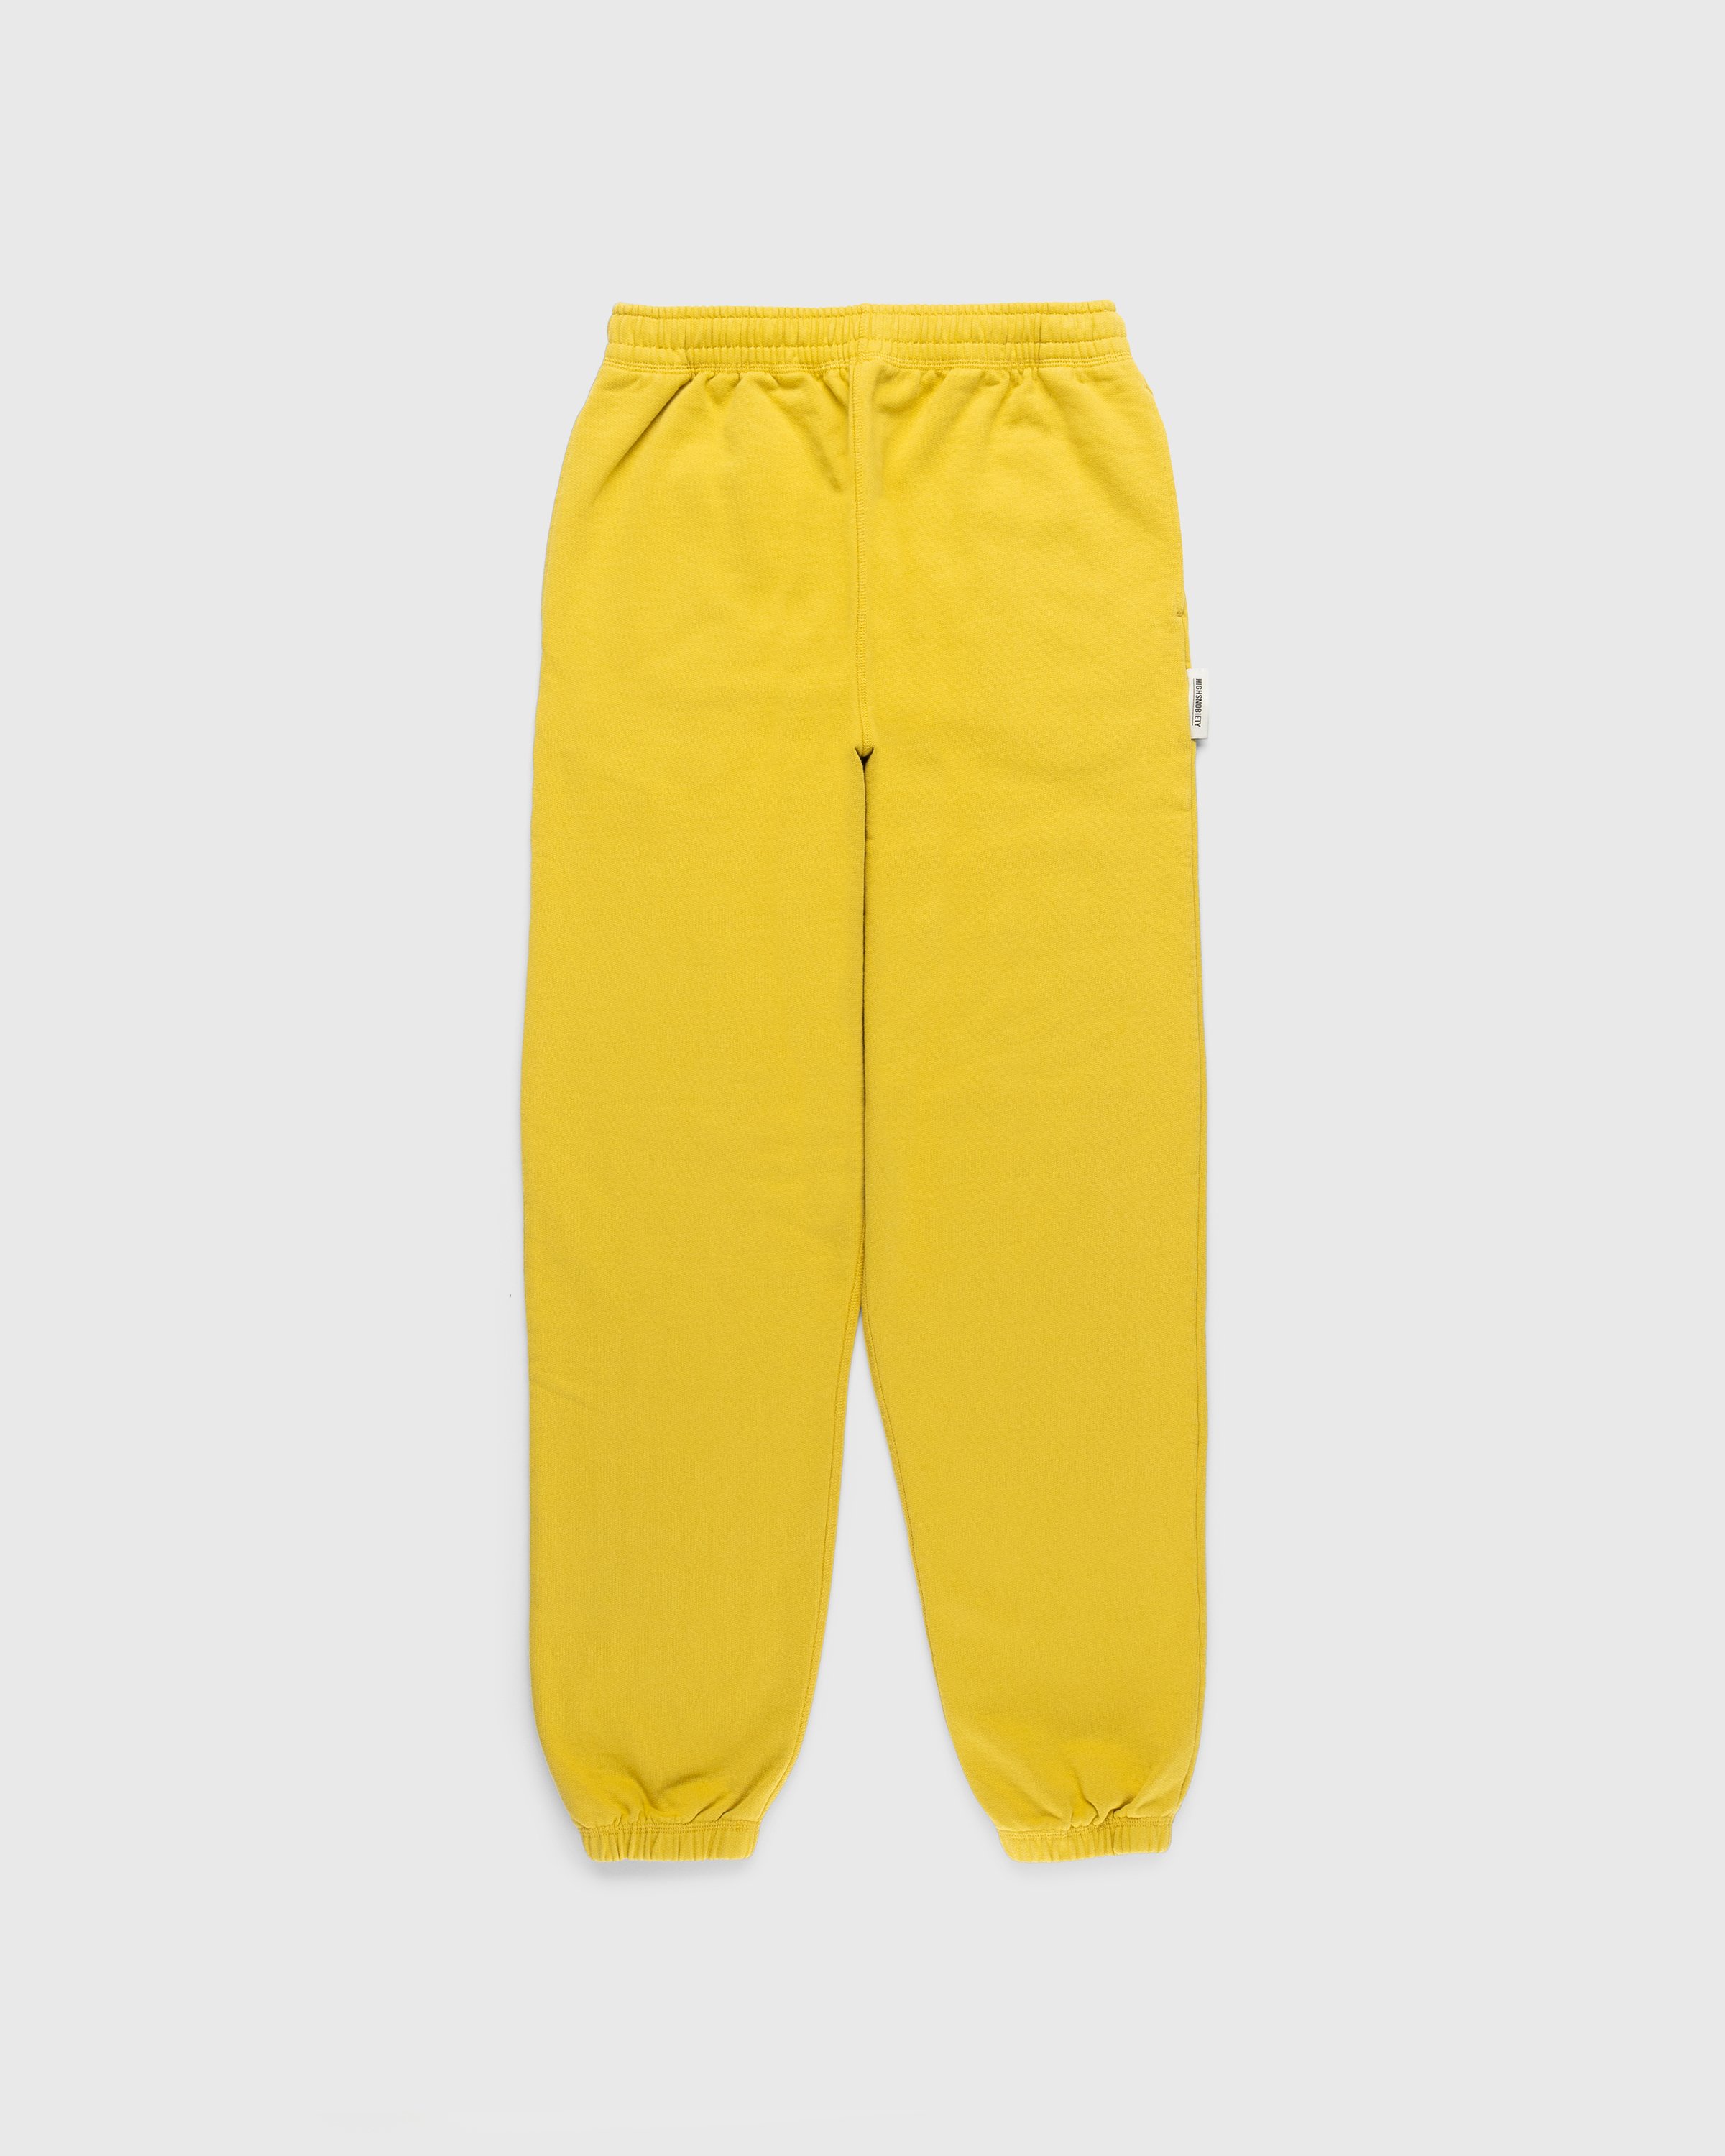 Highsnobiety - Heavy Fleece Pant Mustard - Clothing - Yellow - Image 1